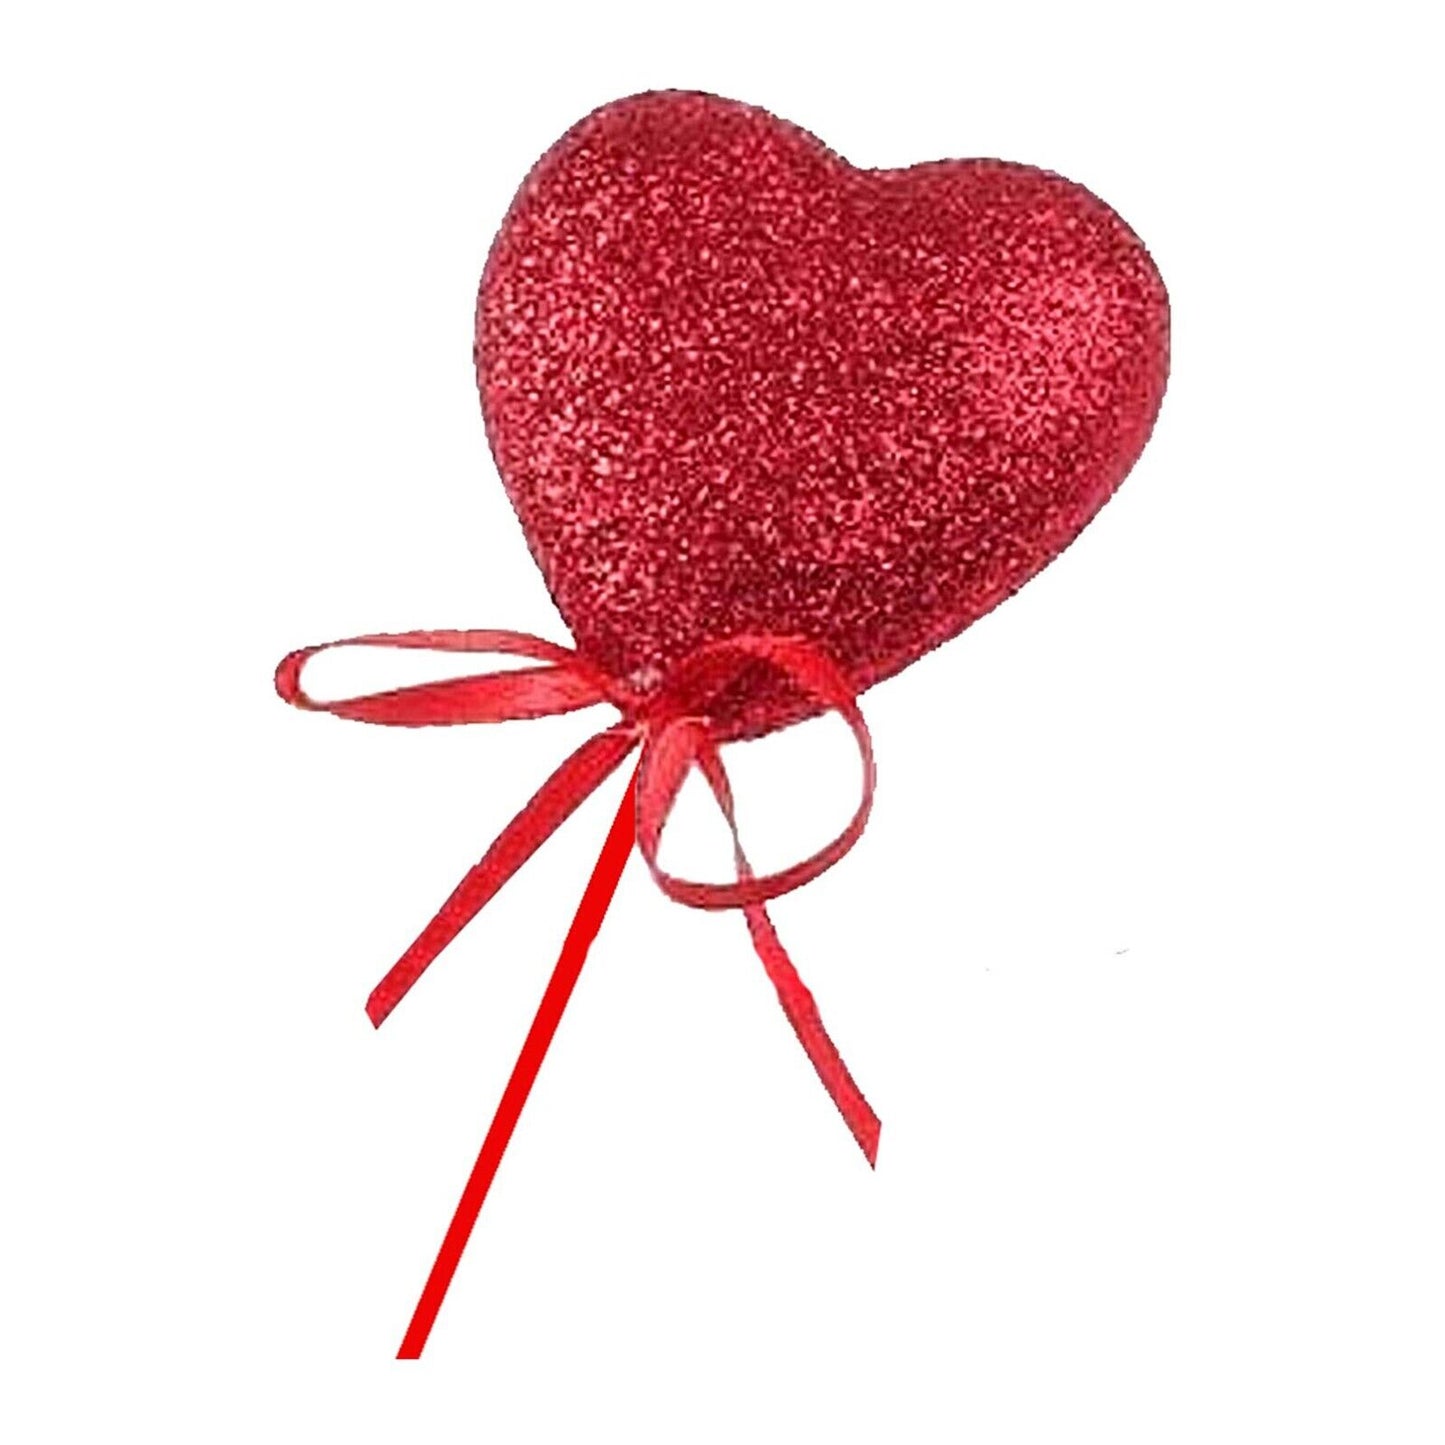 Glitter Hearts On Sticks 6 Pack single image